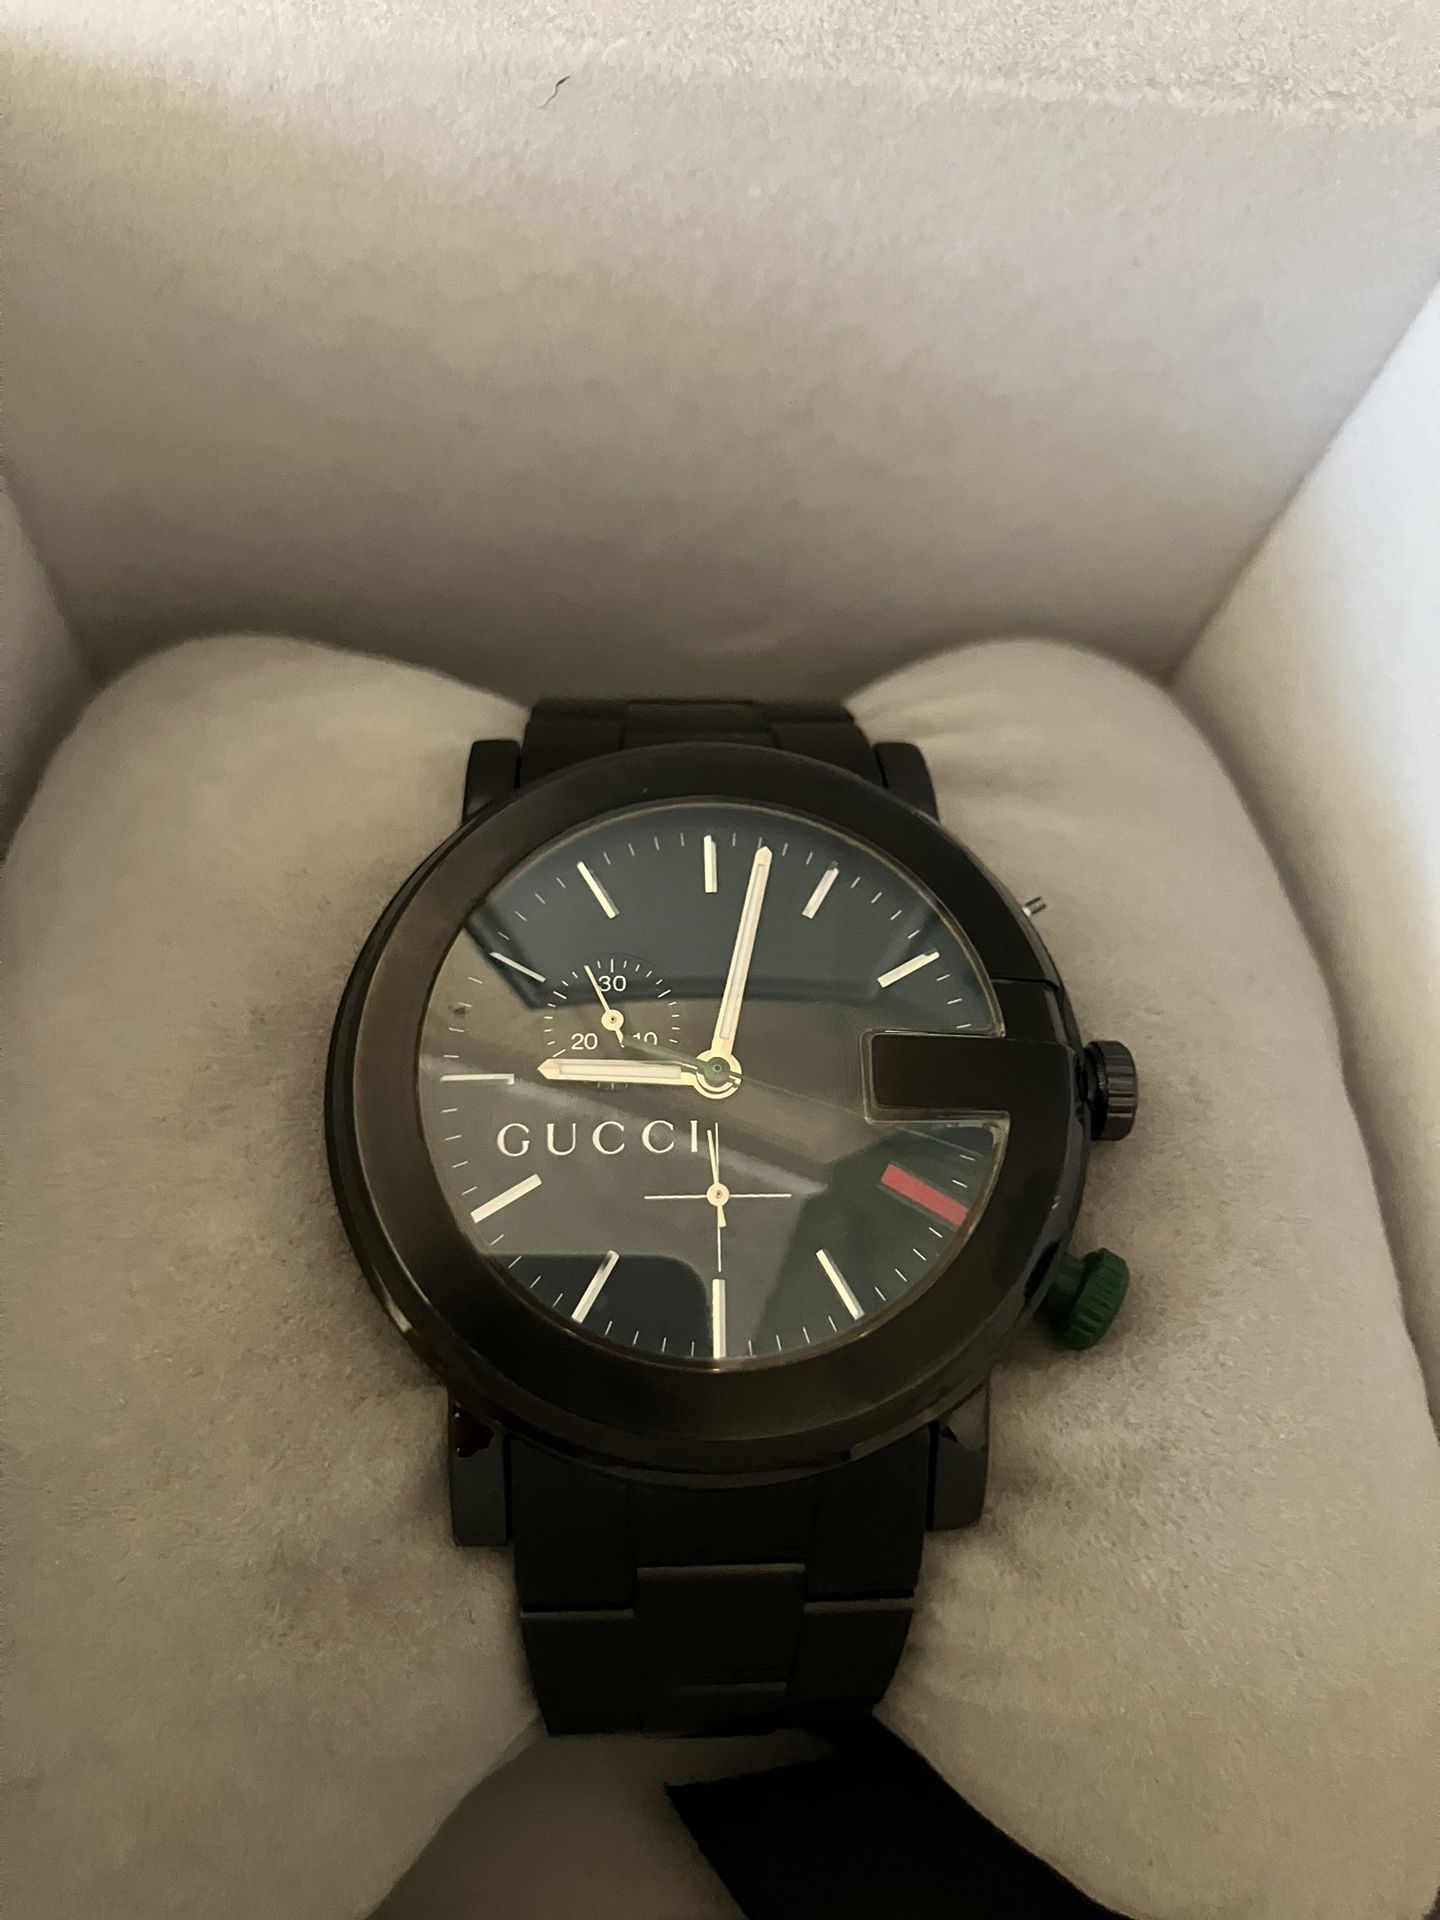 G Chrono Gucci Watch 